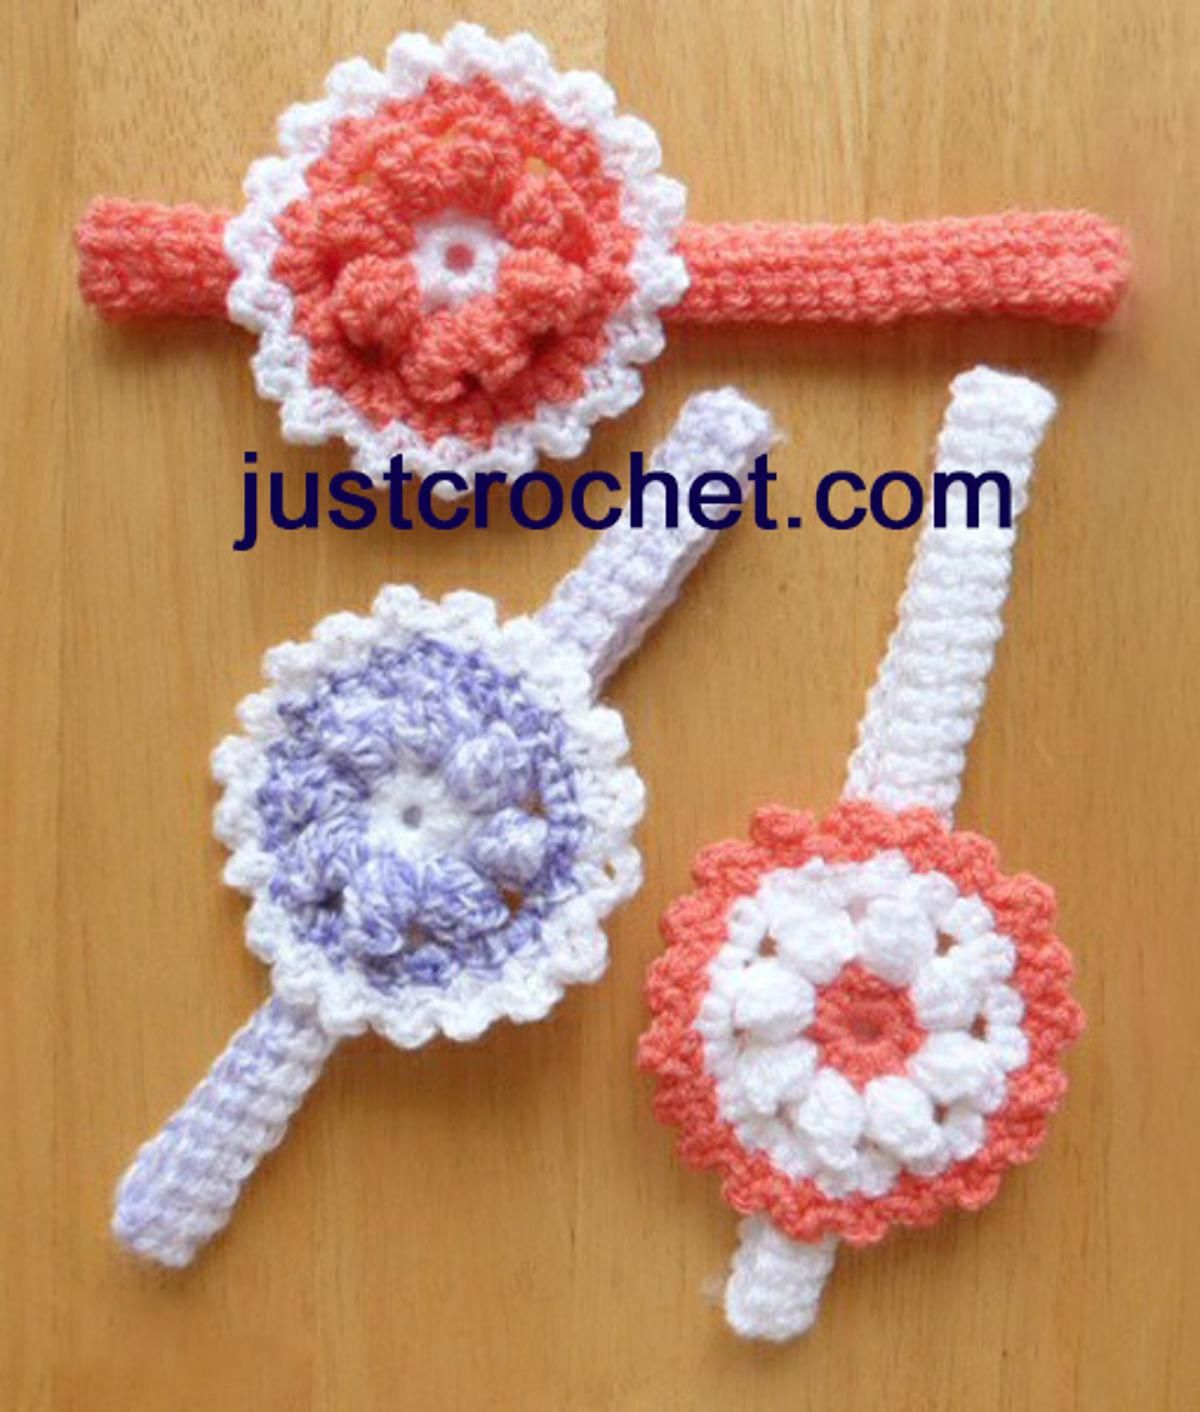 Crochet Headband With Flower Pattern Fjc123 Headband With Flower Ba Crochet Pattern Patterns